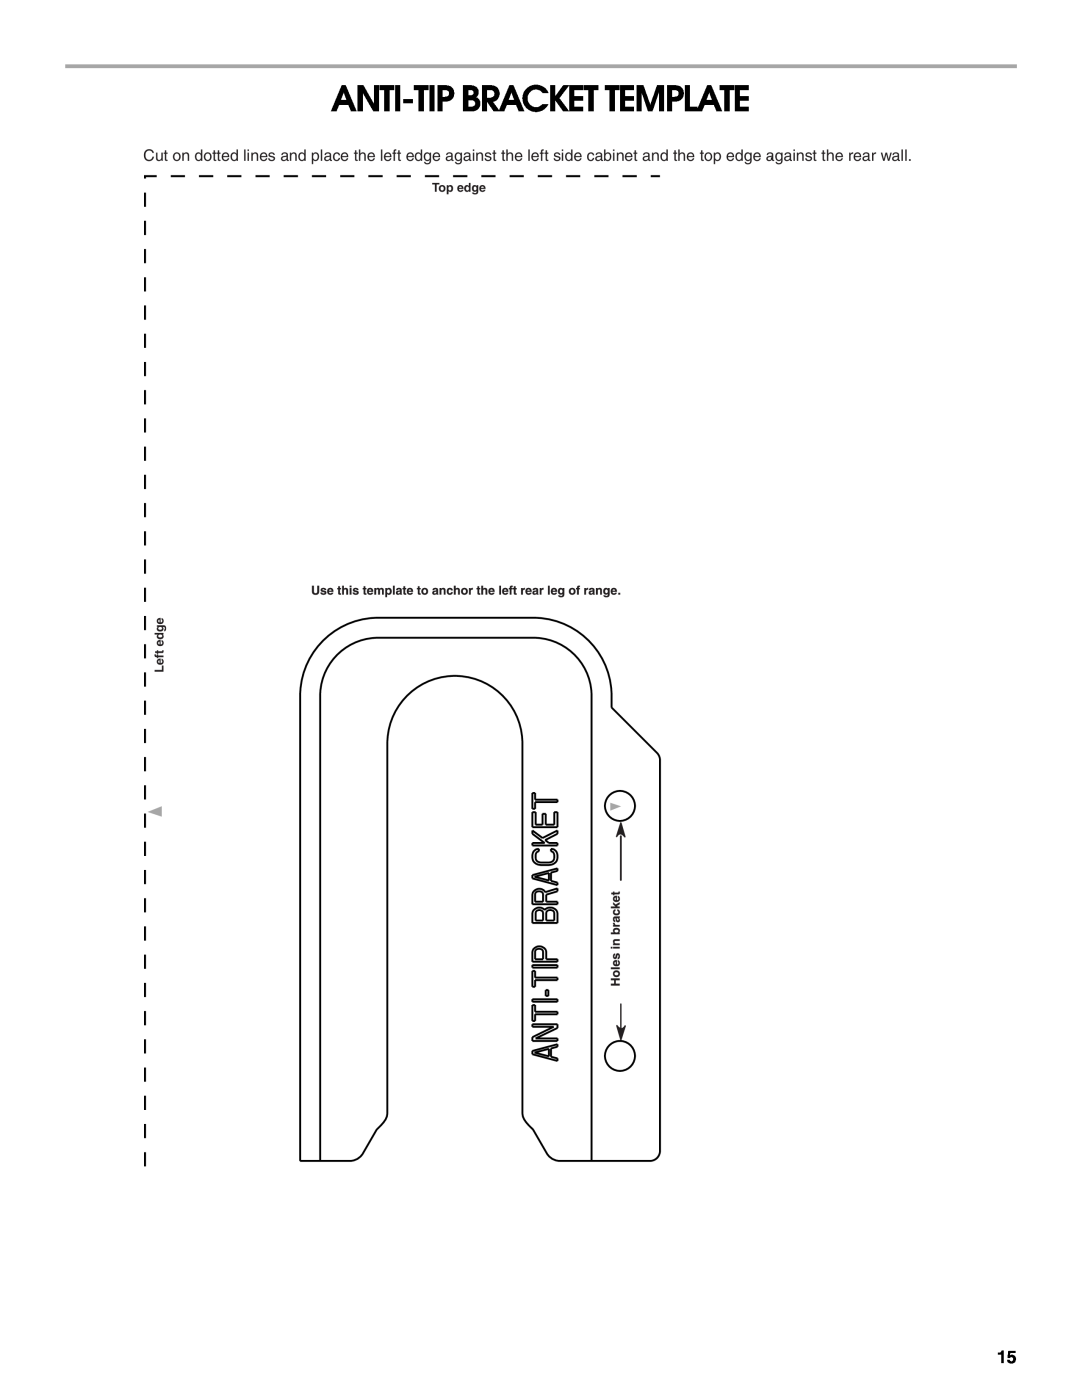 Maytag W10252706B installation instructions Anti-Tip Bracket Template, Top edge Left edge 